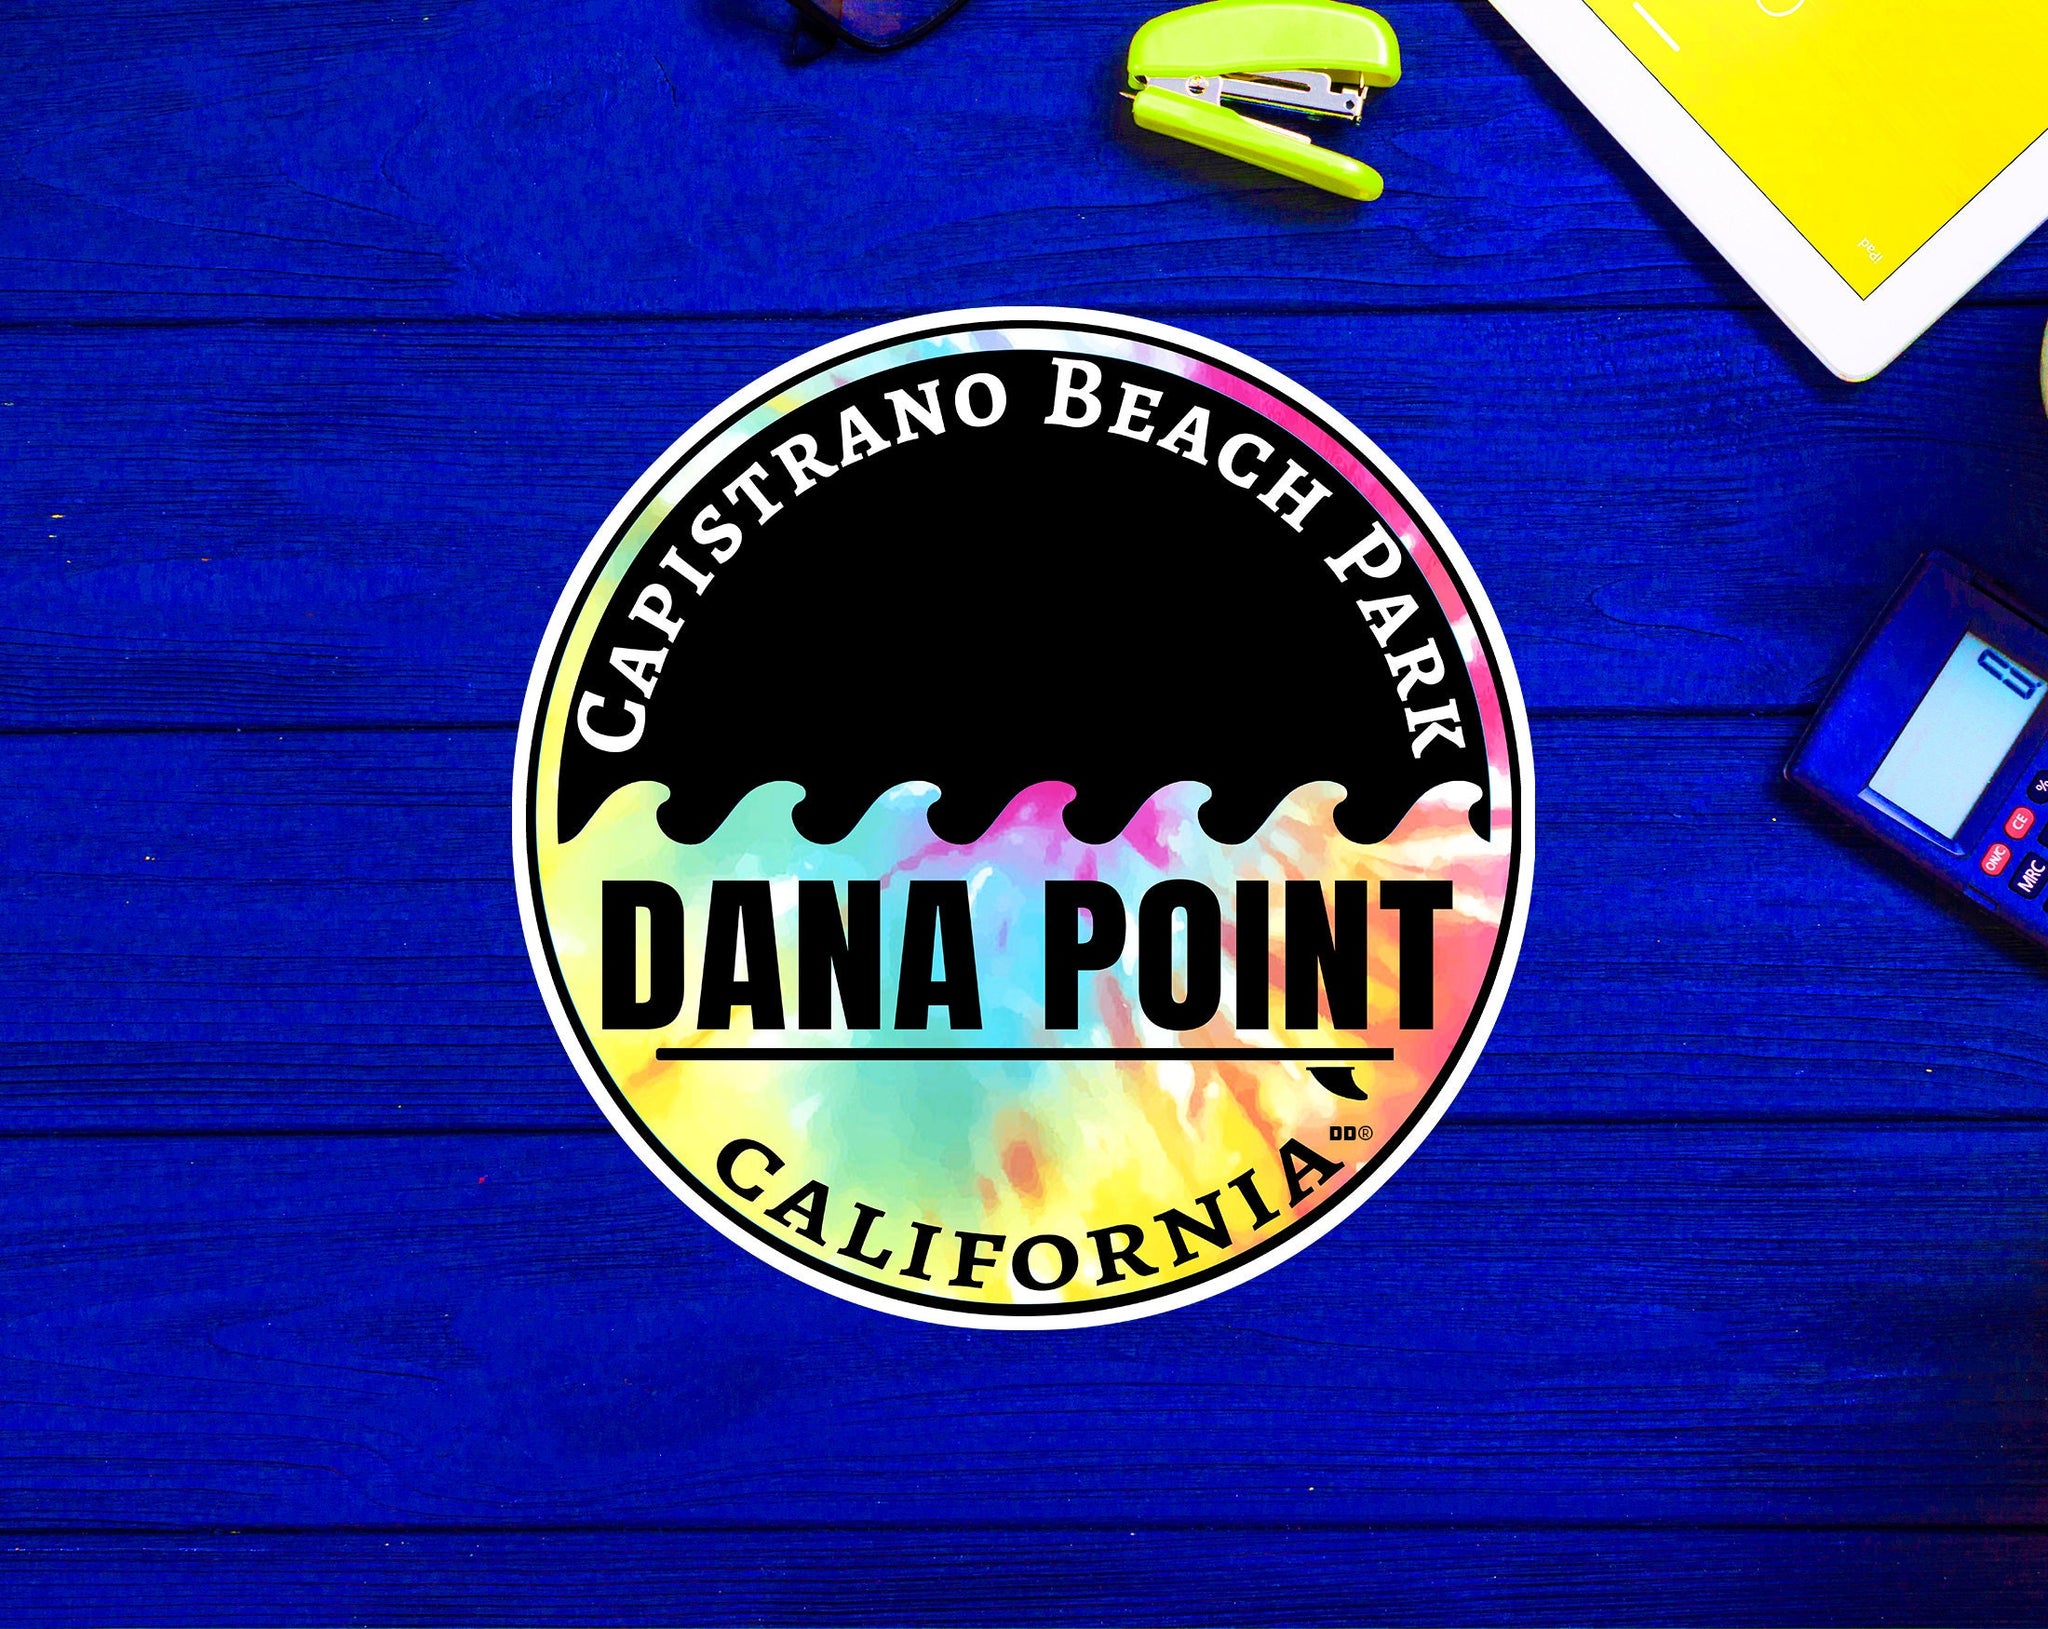 Dana Point California Surfing Capistrano Beach Park Surf Sticker 3"